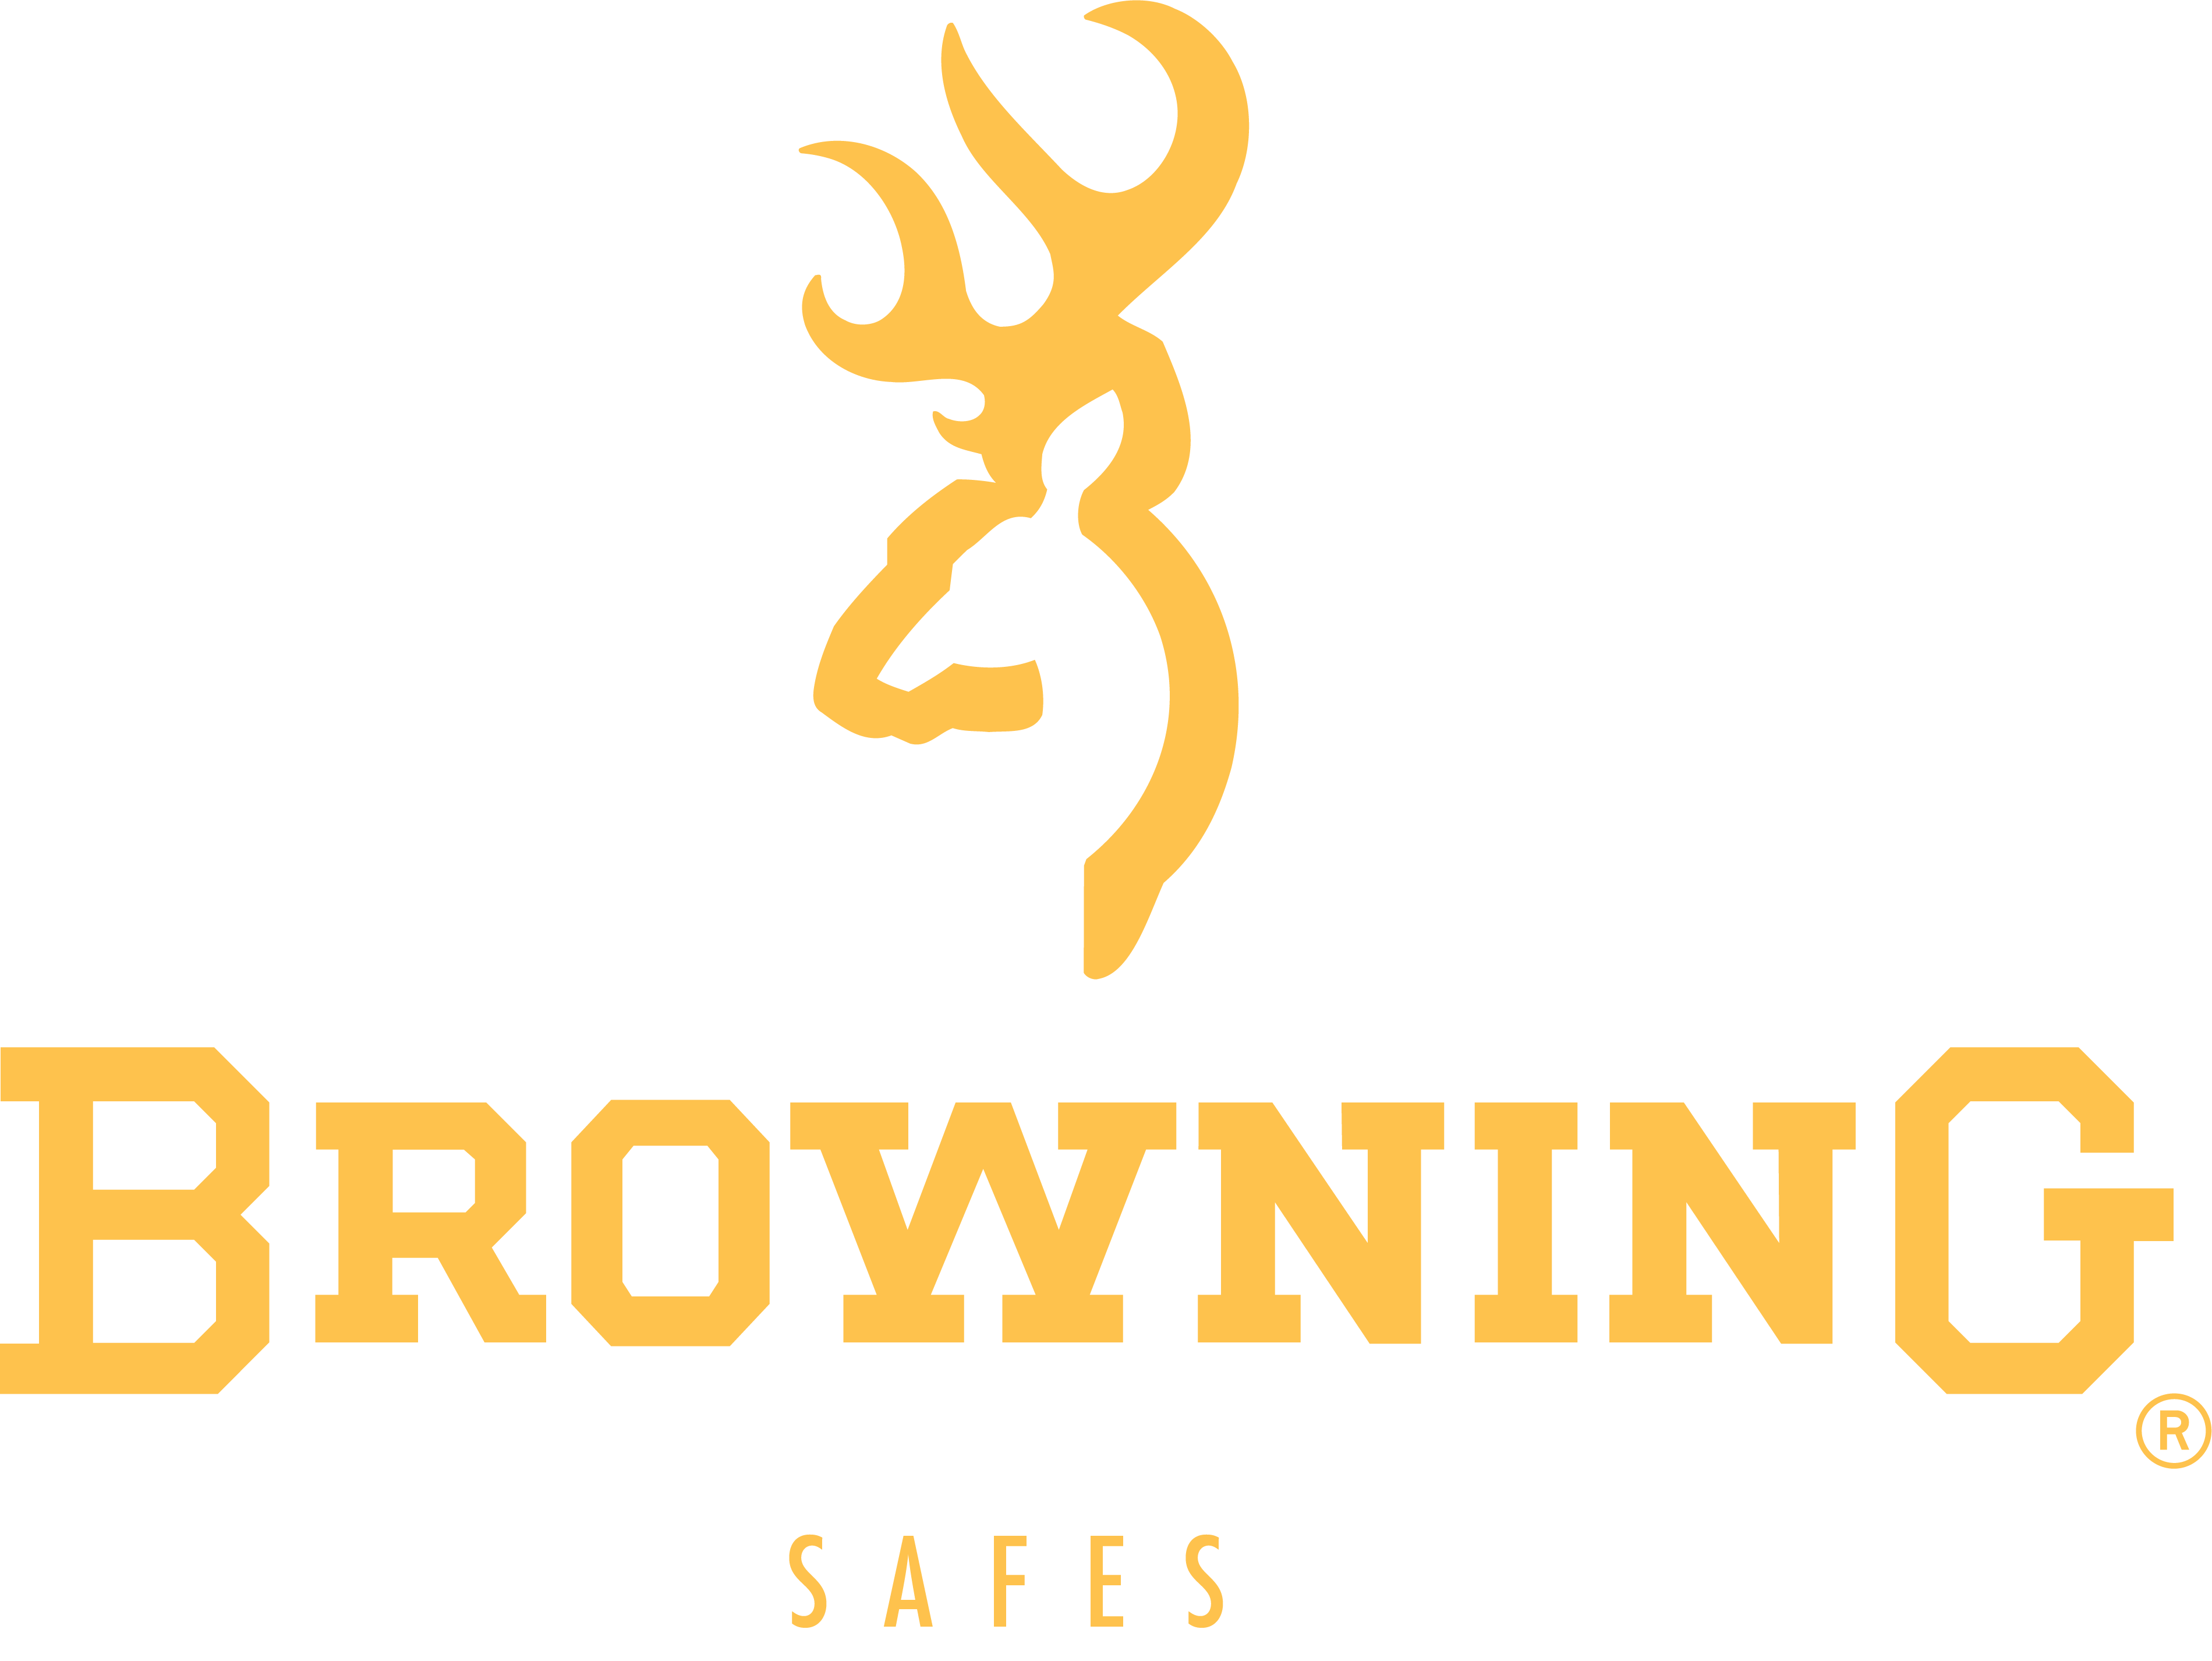 Browning Safes logo with Browning Buckmark